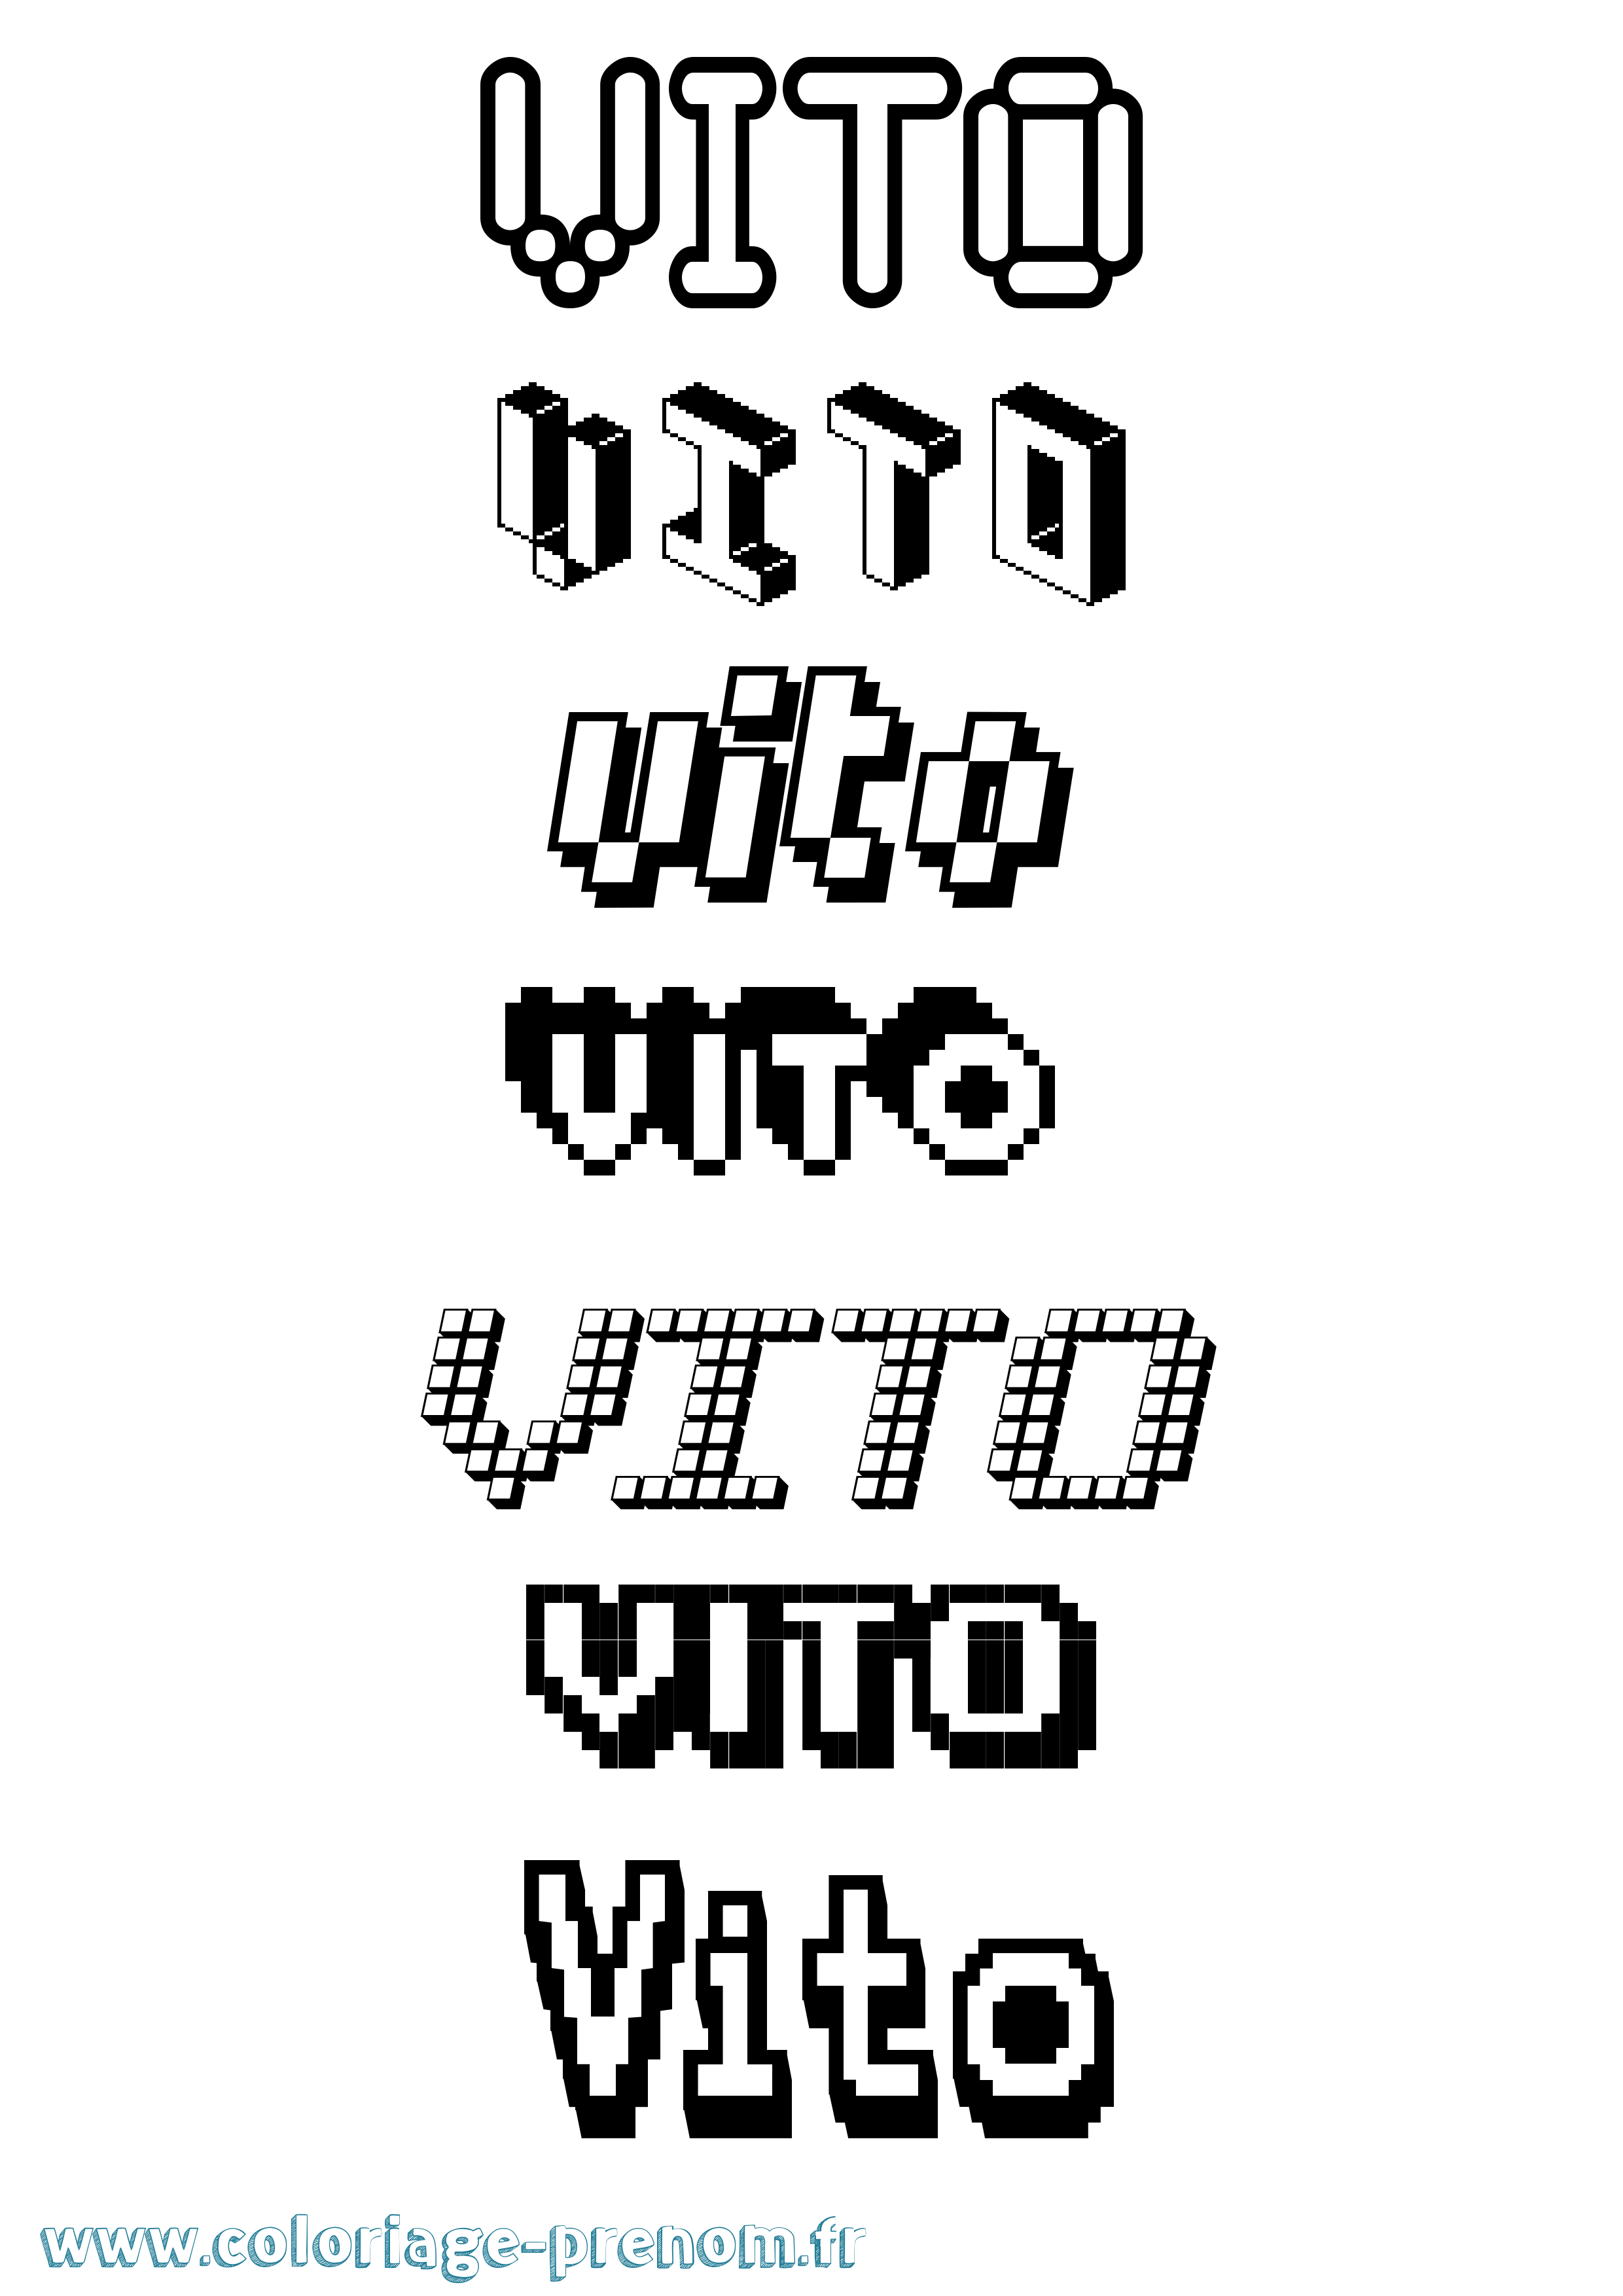 Coloriage prénom Vito Pixel